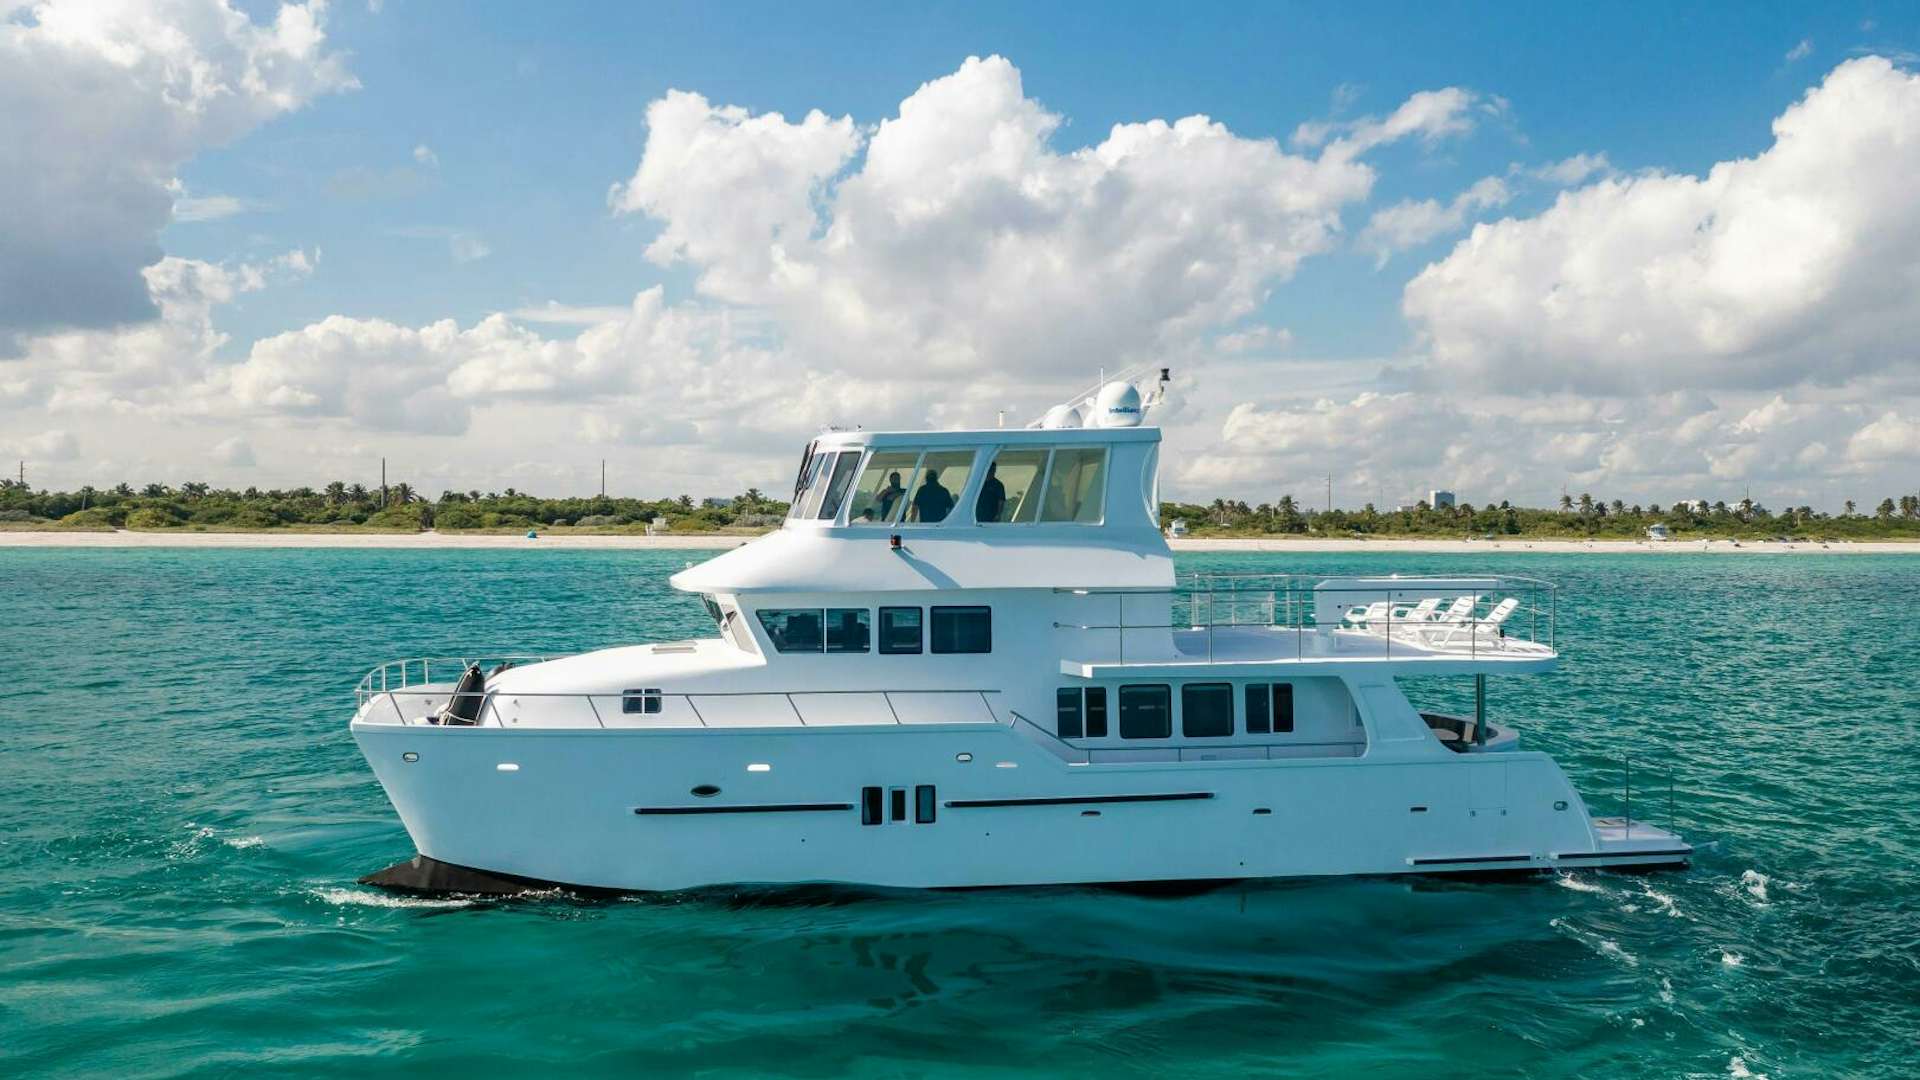 Barbara gail
Yacht for Sale